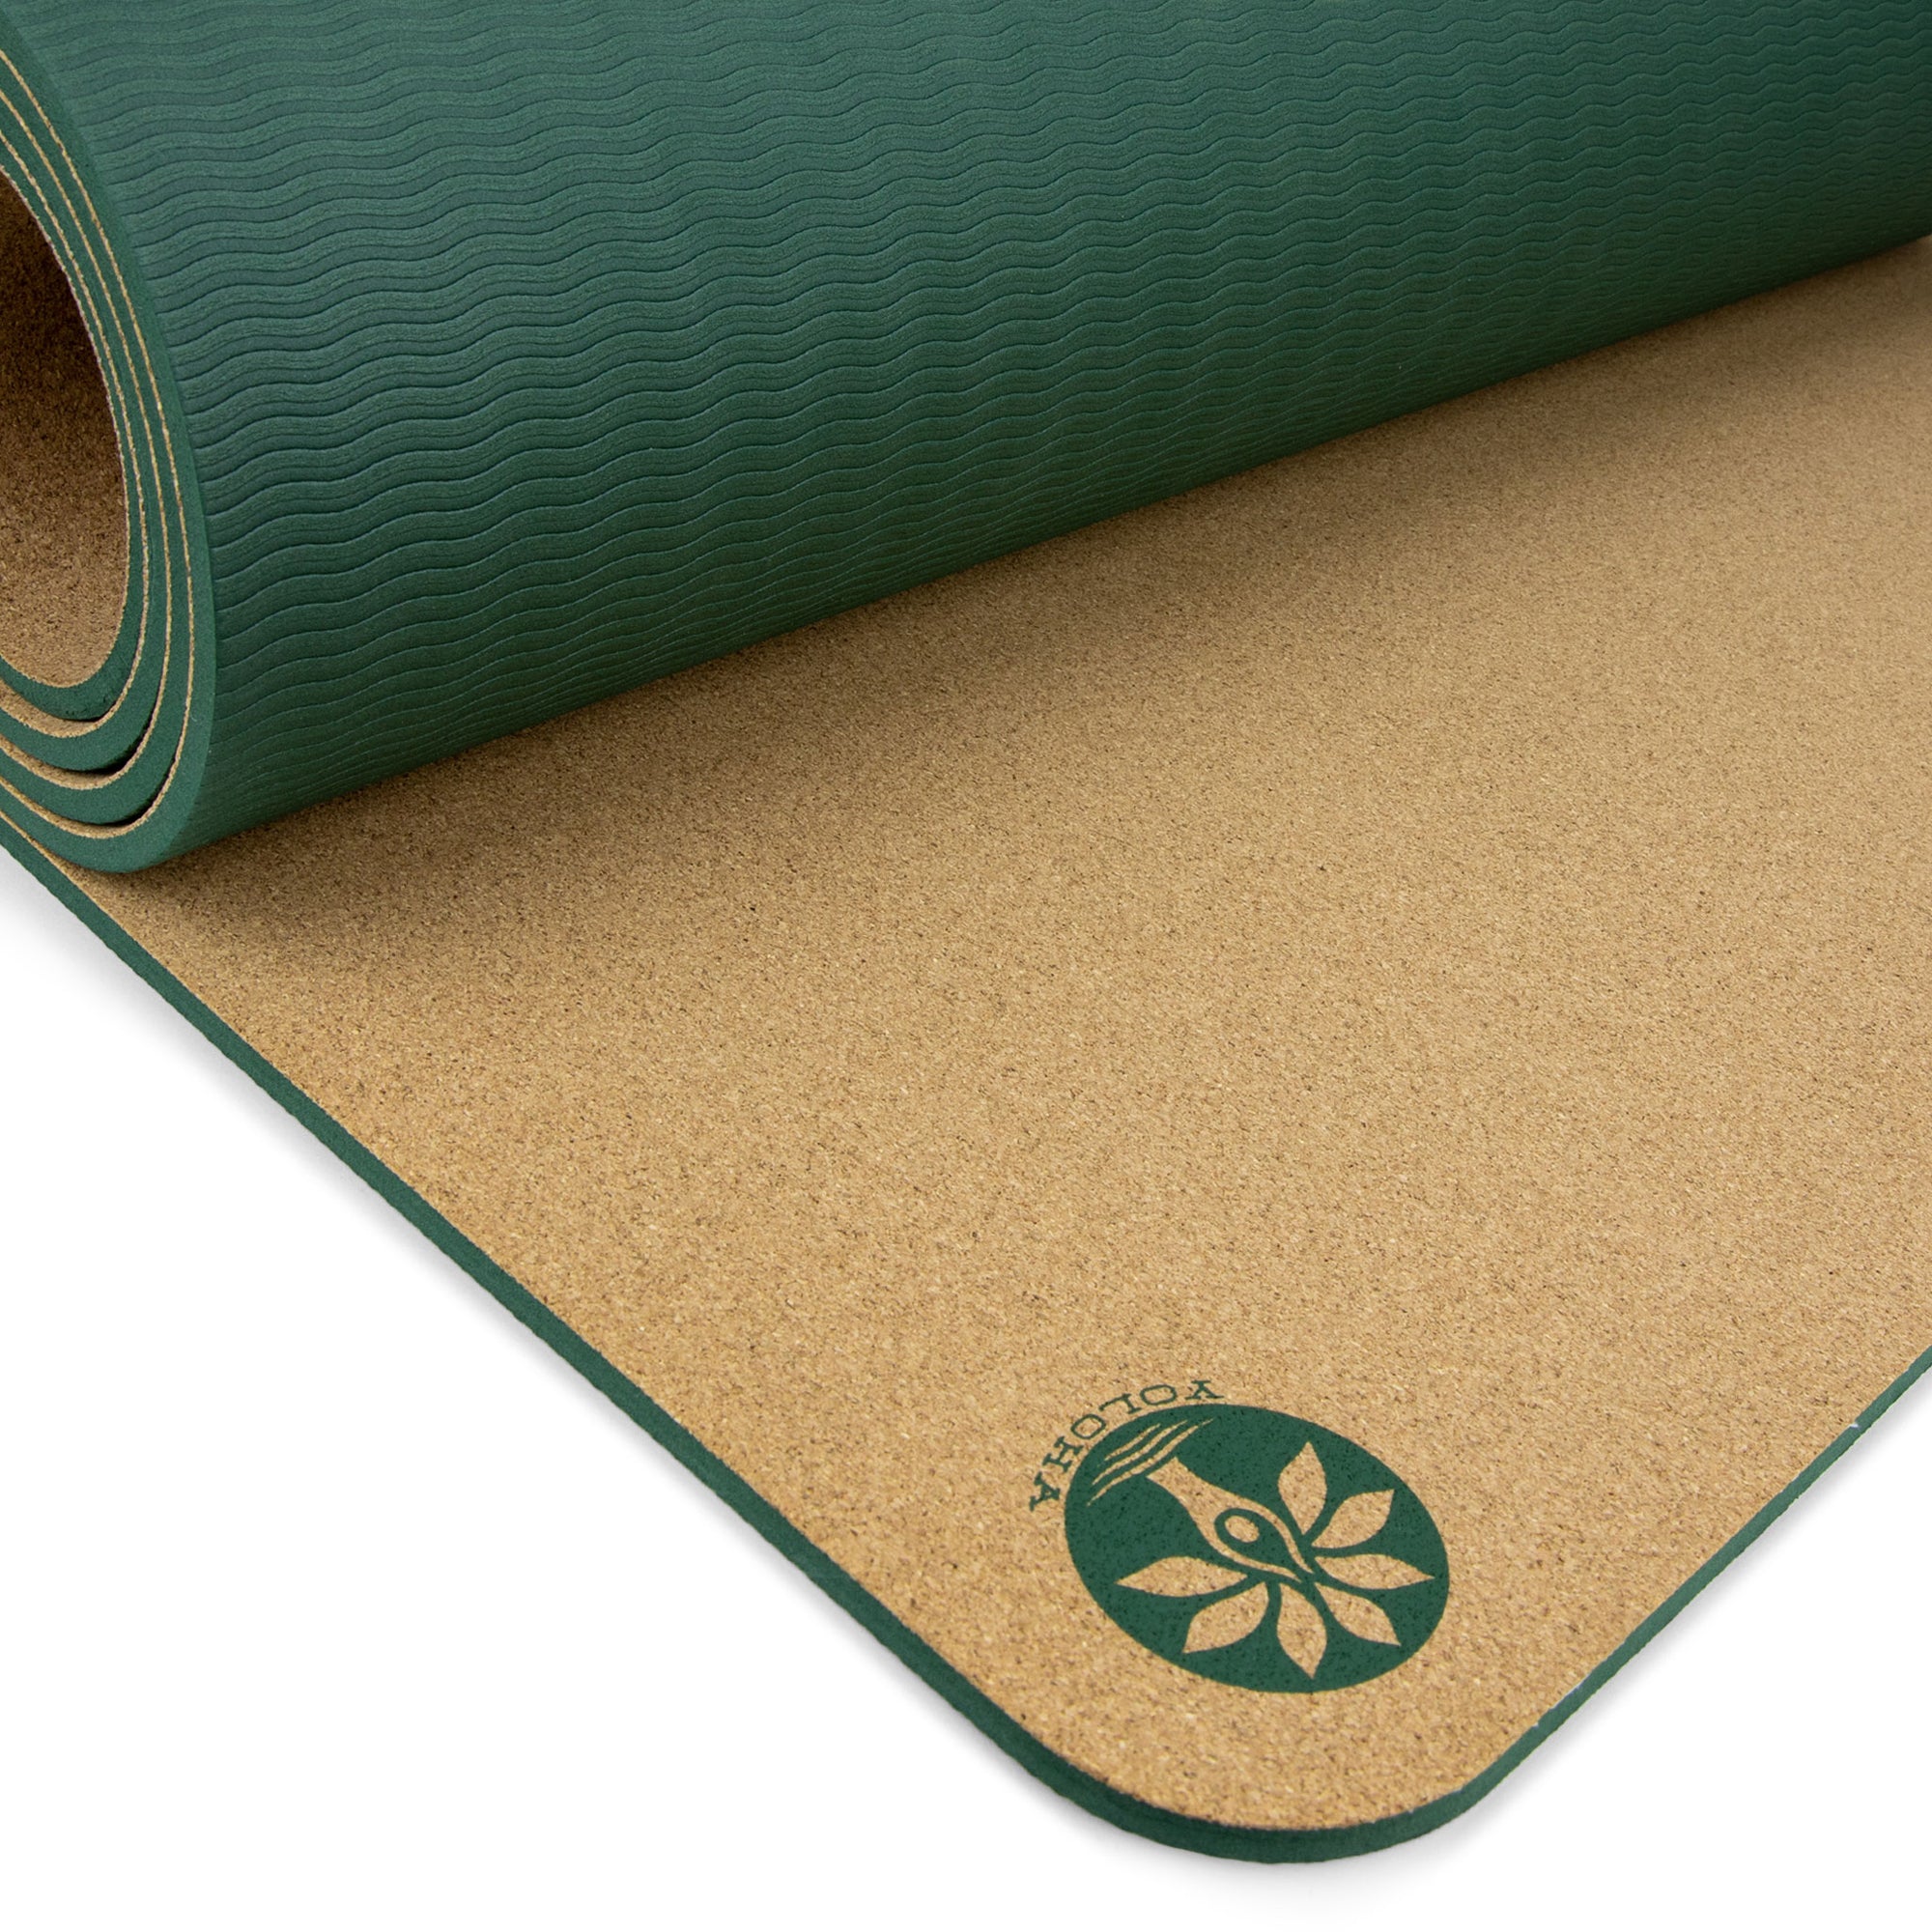 Natural Cork Rubber Yoga Mat Non Slip for Home Gym Bahrain